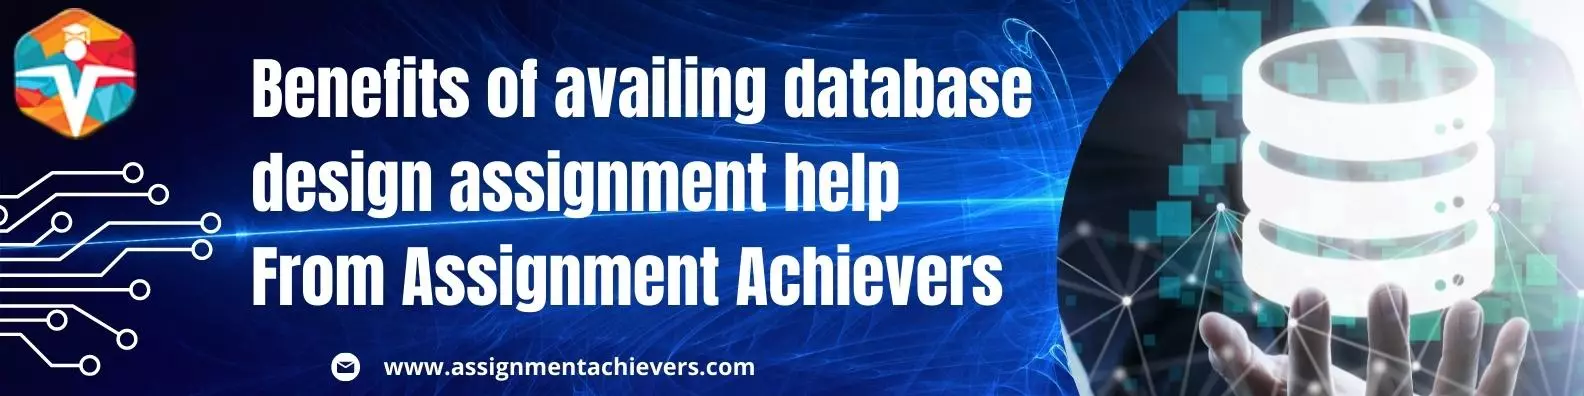 Database Design Assignment Help